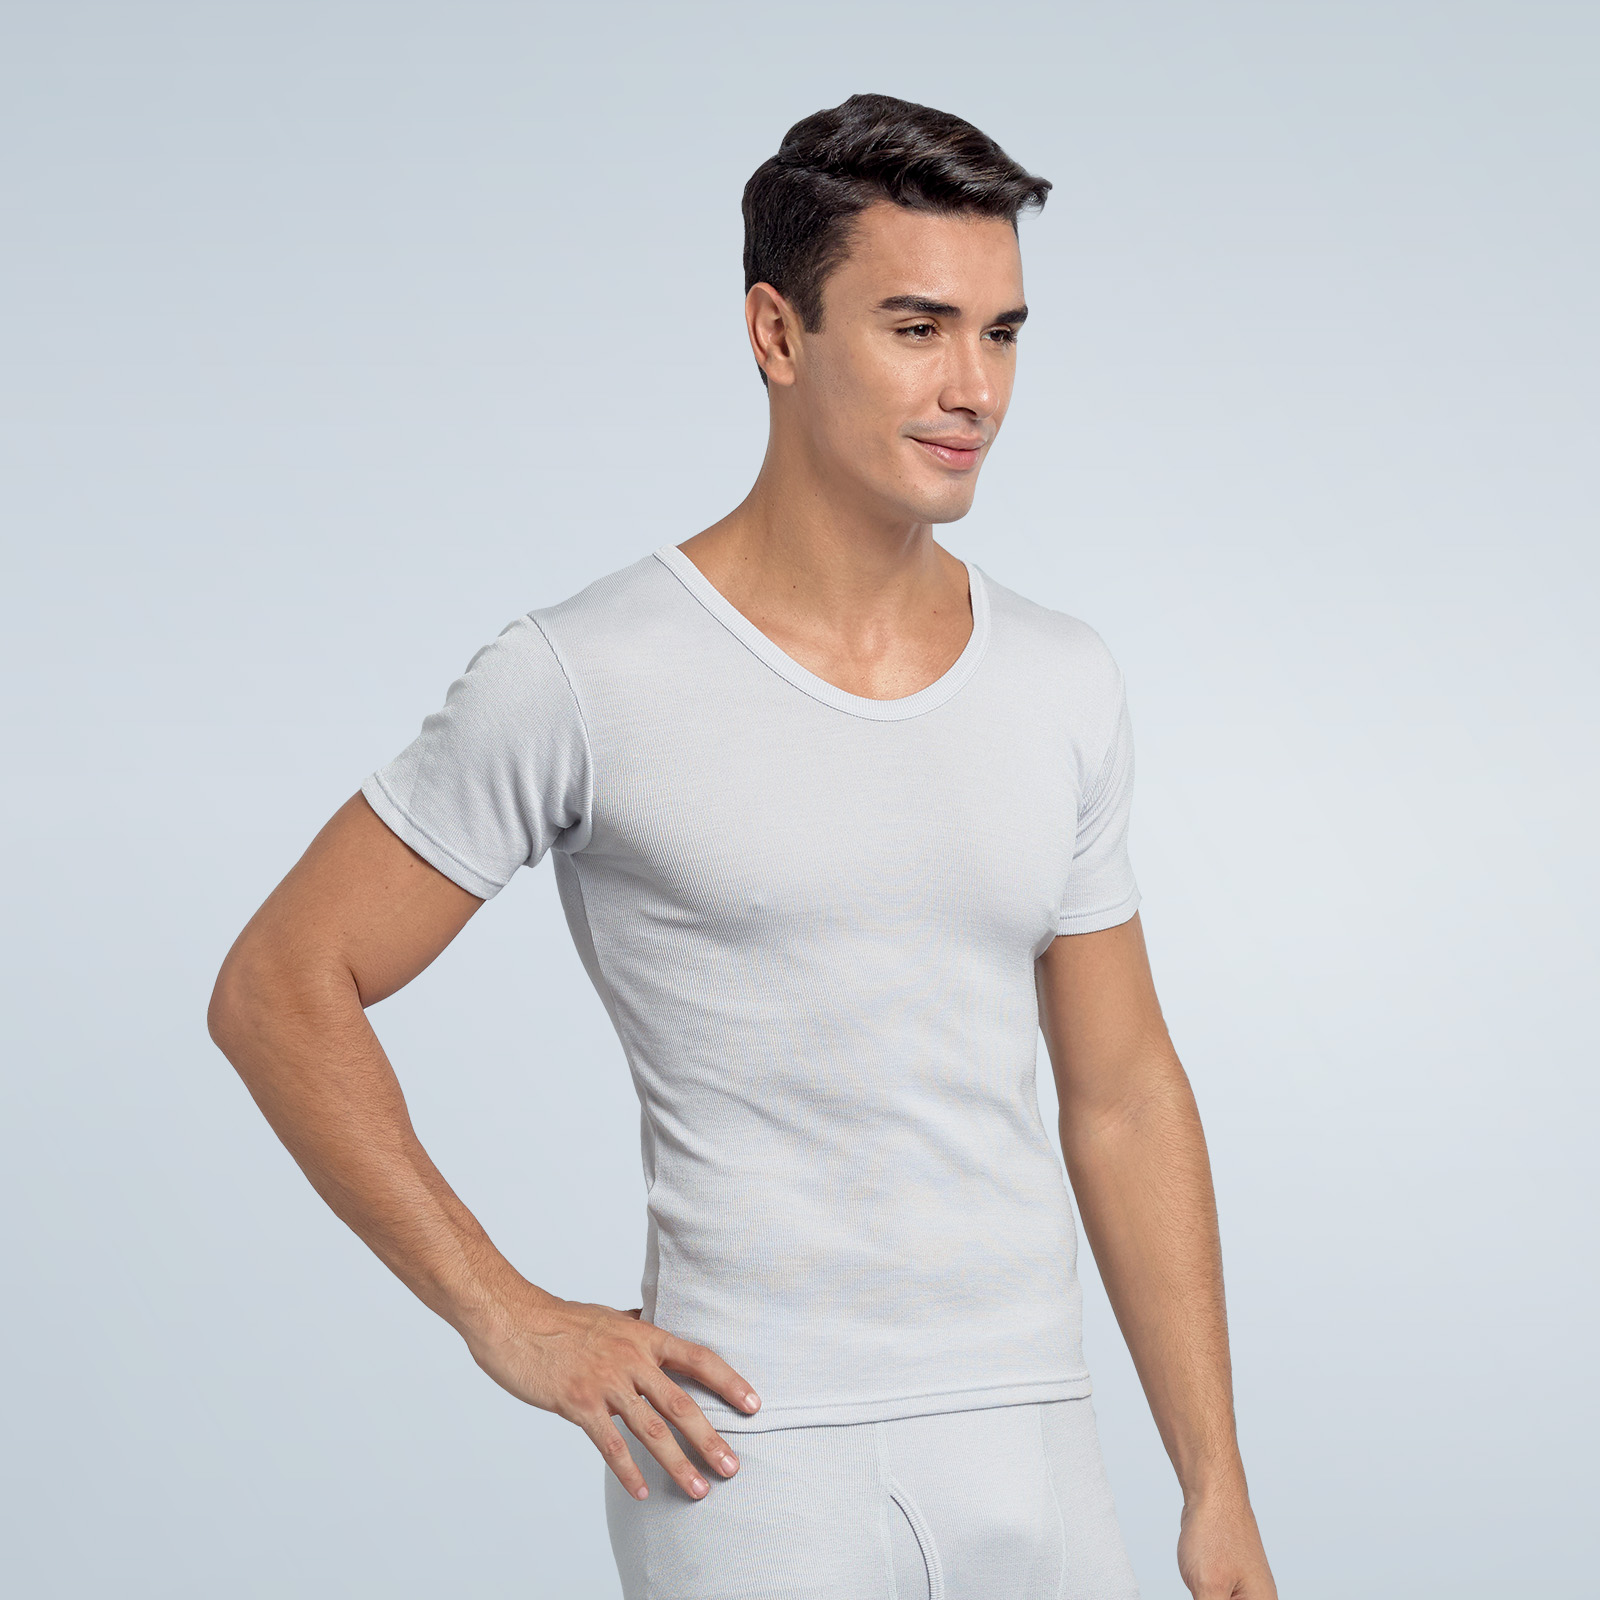 UW154 Men’s Short-Sleeve Undershirt - Nefful Singapore Holdings